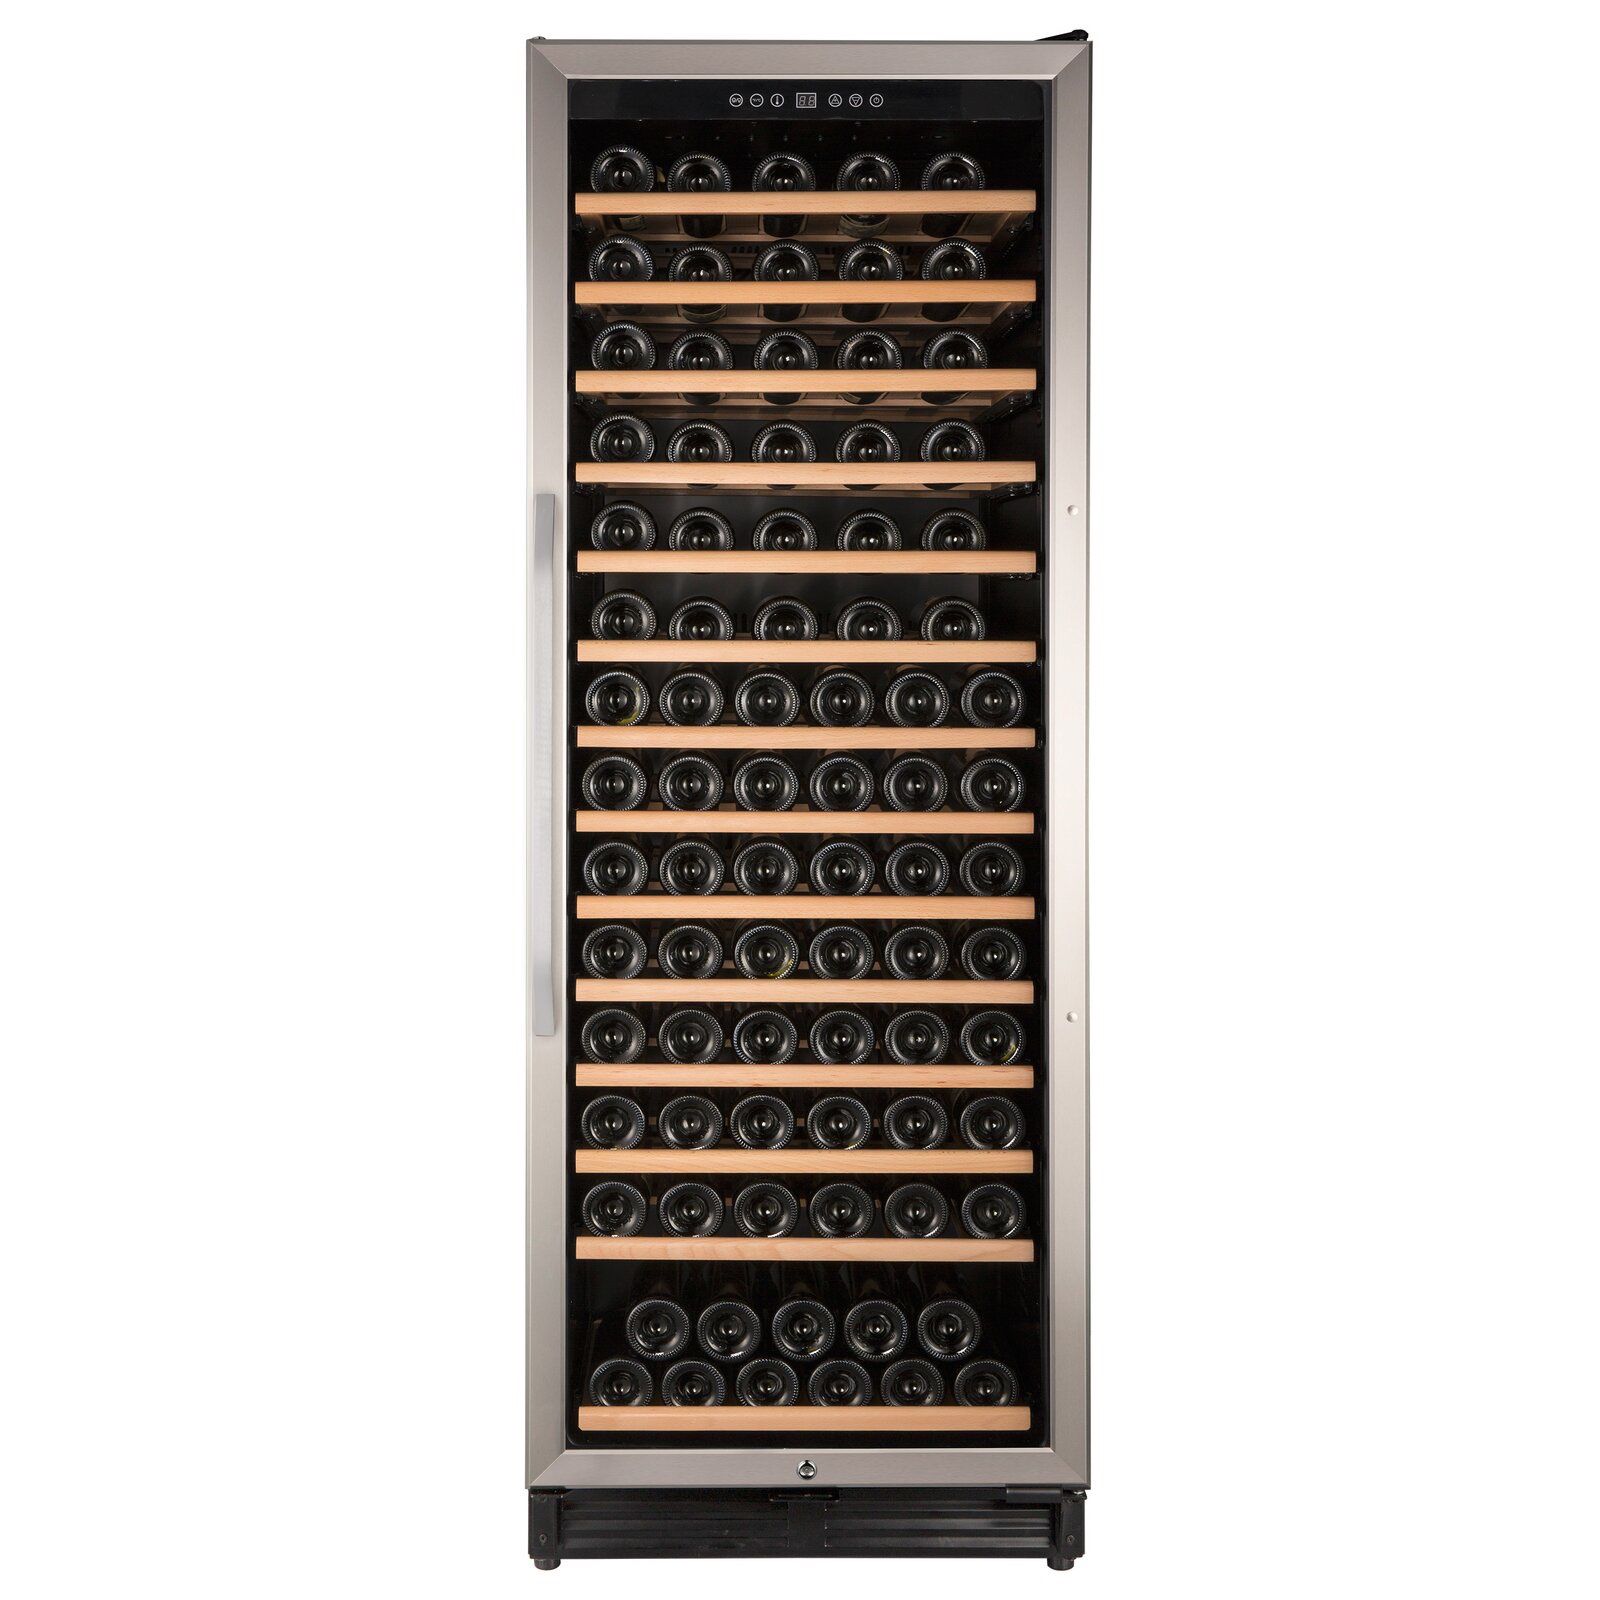 Avanti 149 Bottle Wine Cooler Cellar Refrigerator - Like New - Orig $2420